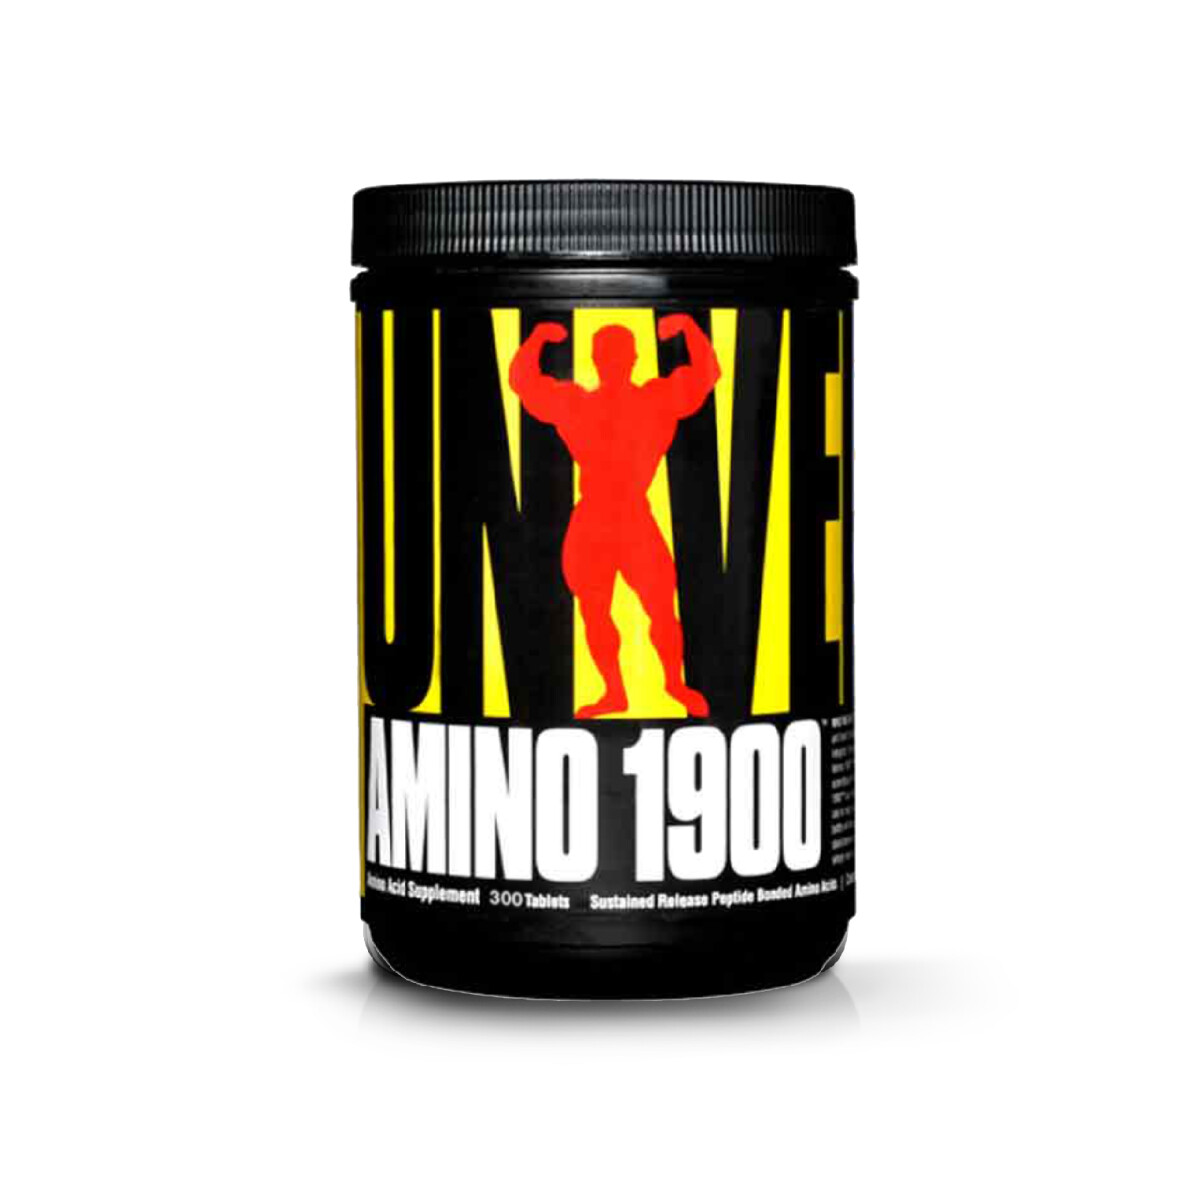 Universal Amino 1900 - 110cc 